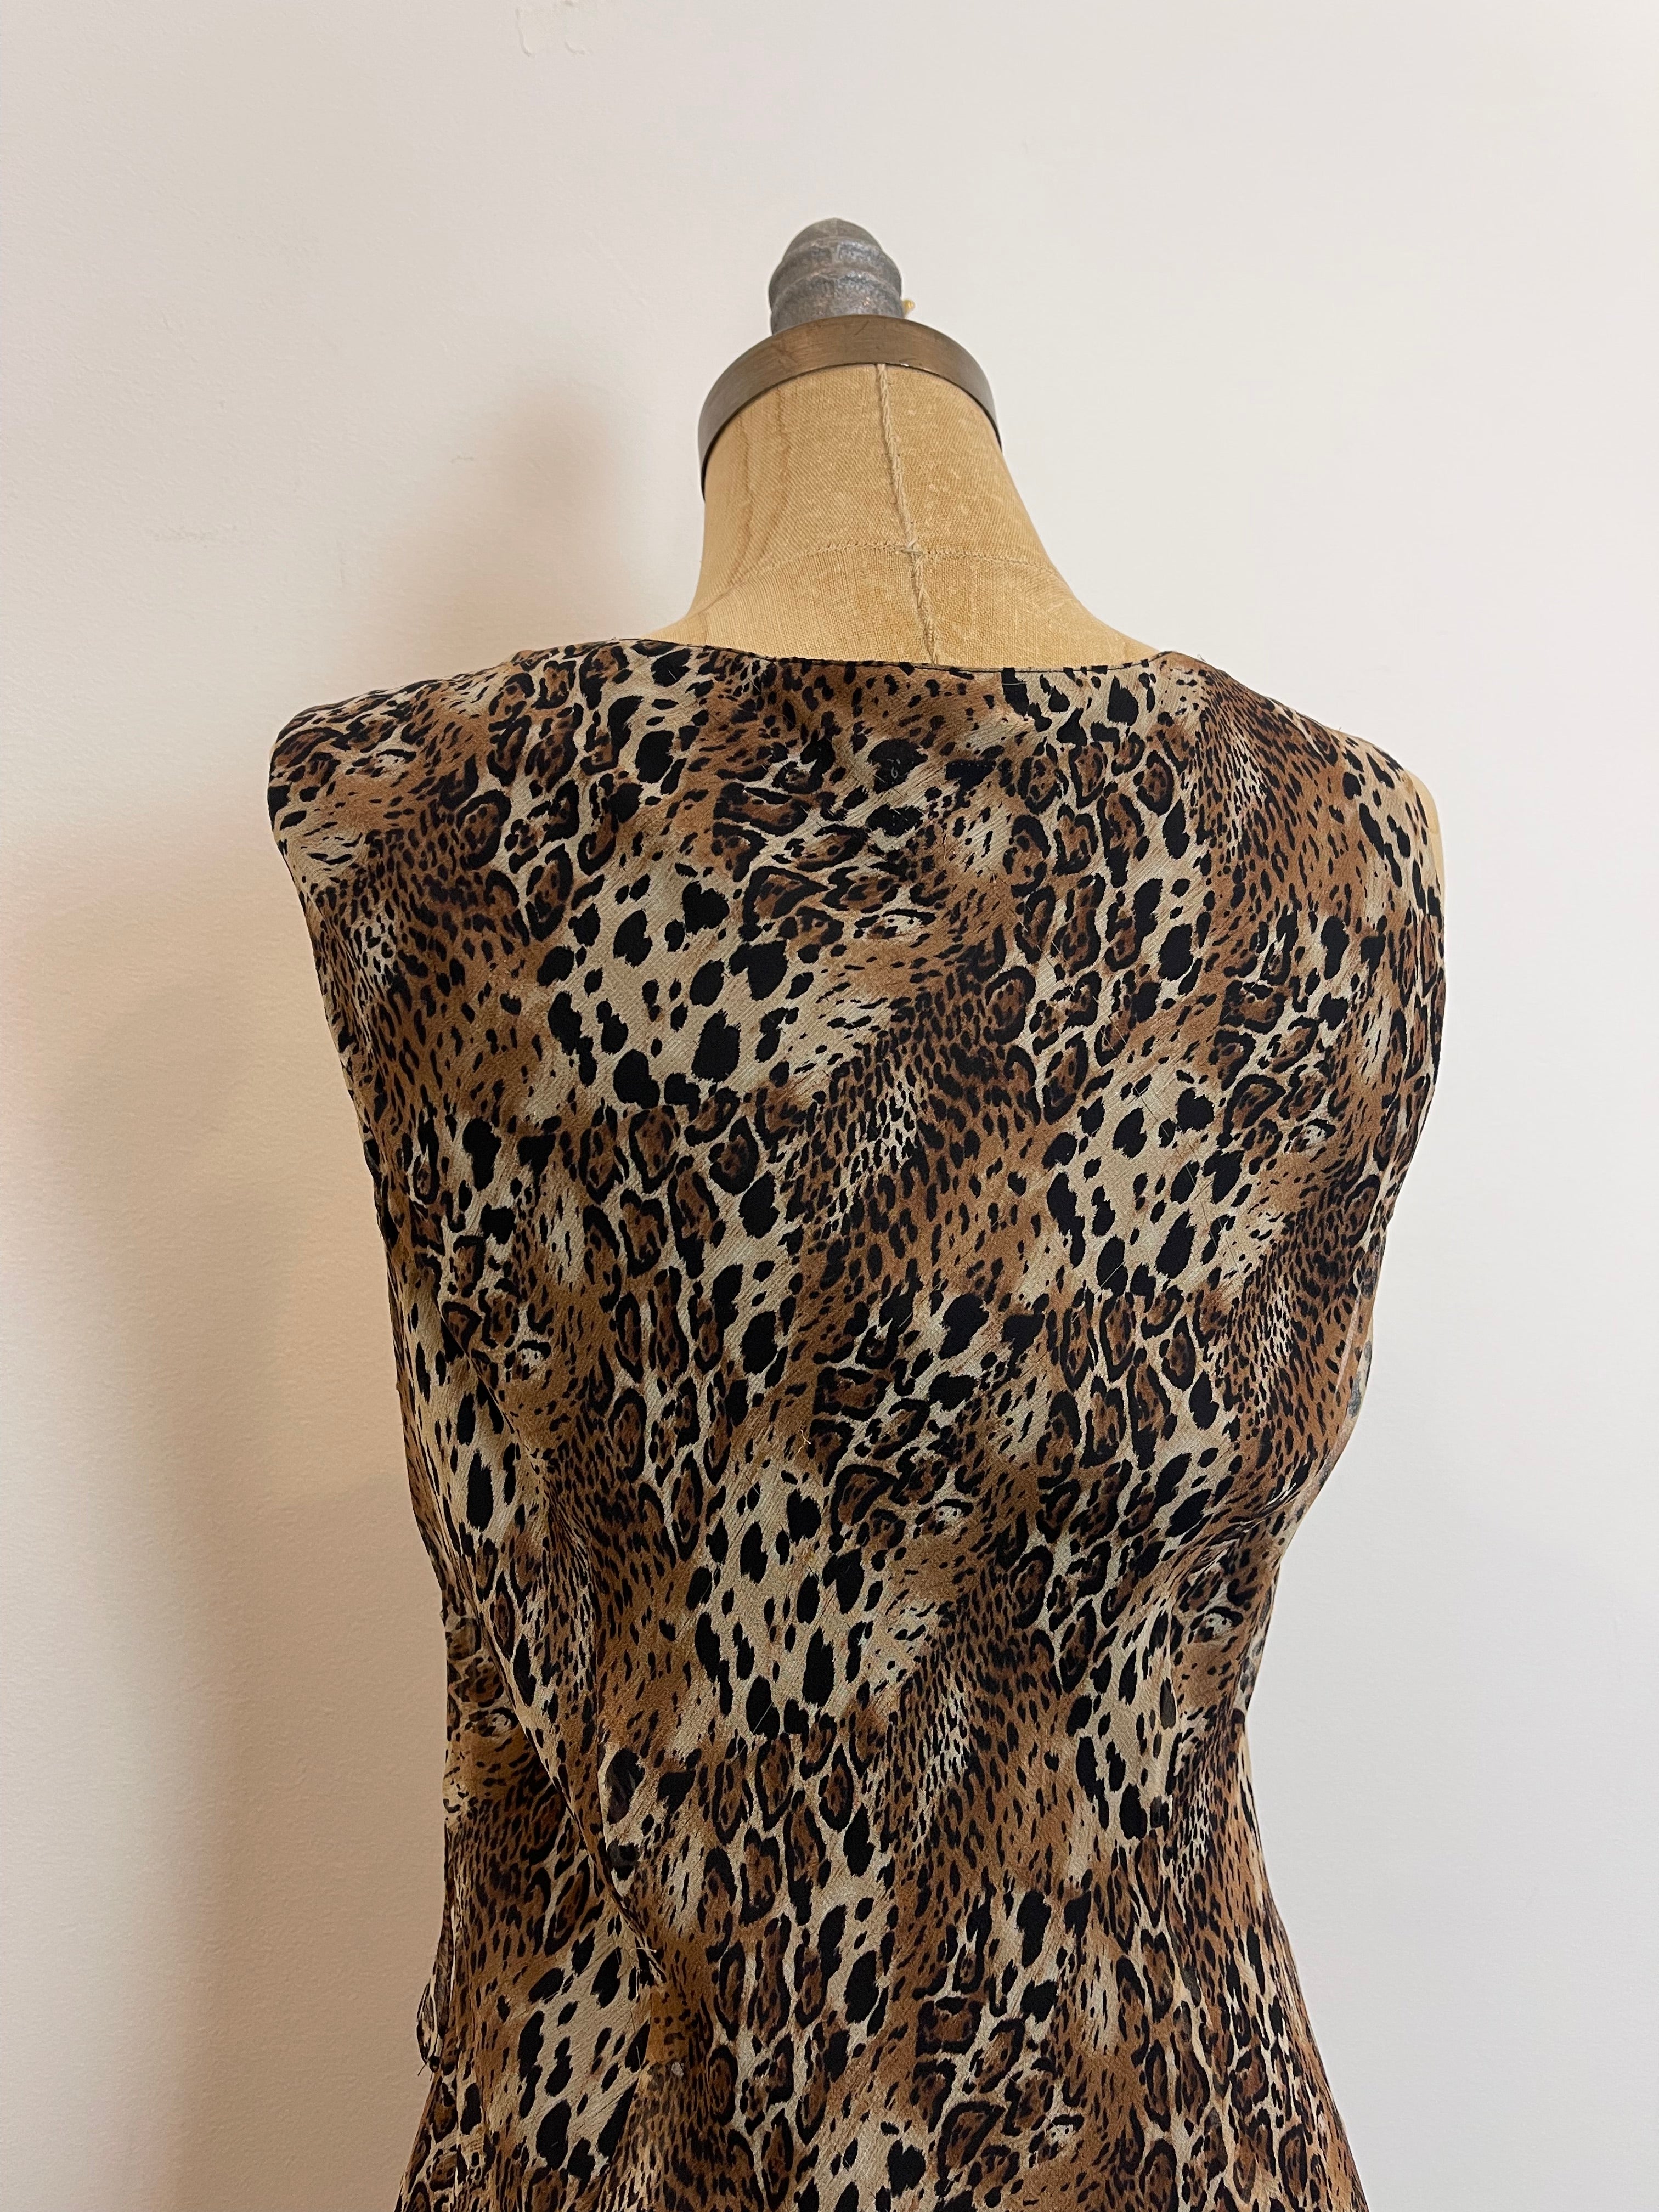 90's Silk Leopard Dress